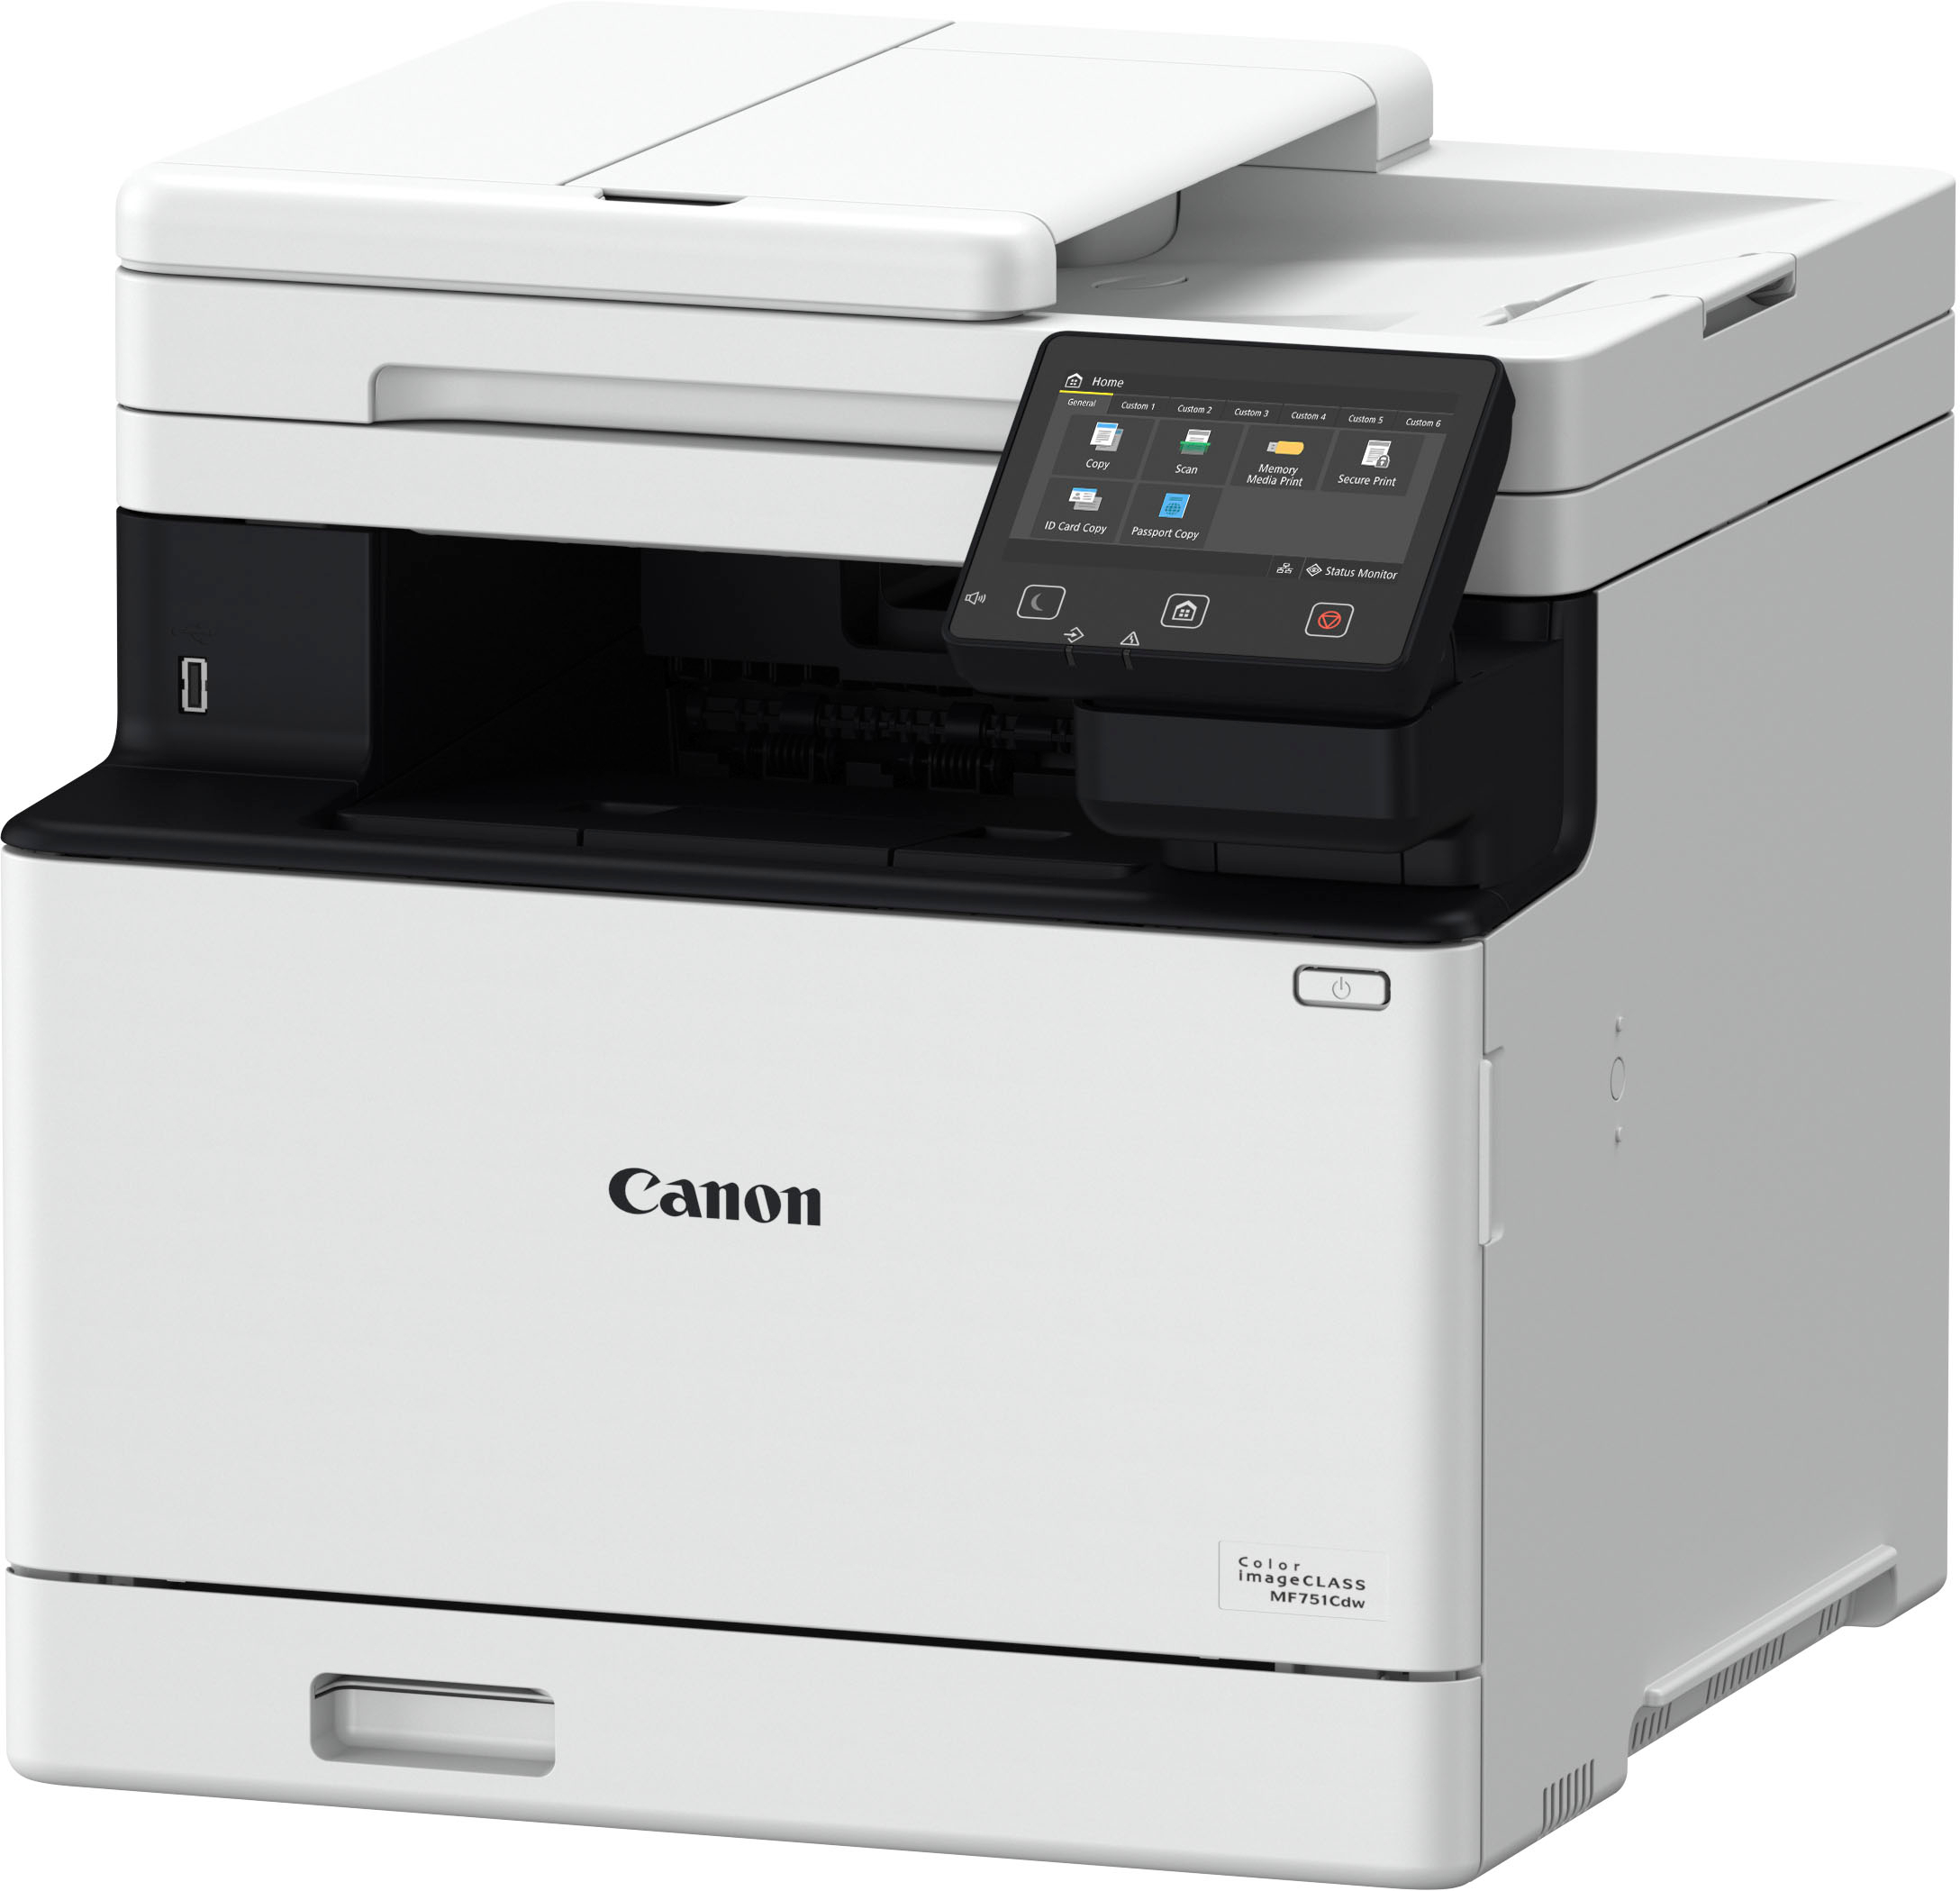 Angle View: Canon - imageCLASS LBP247dw Wireless Black-and-White Laser Printer - White